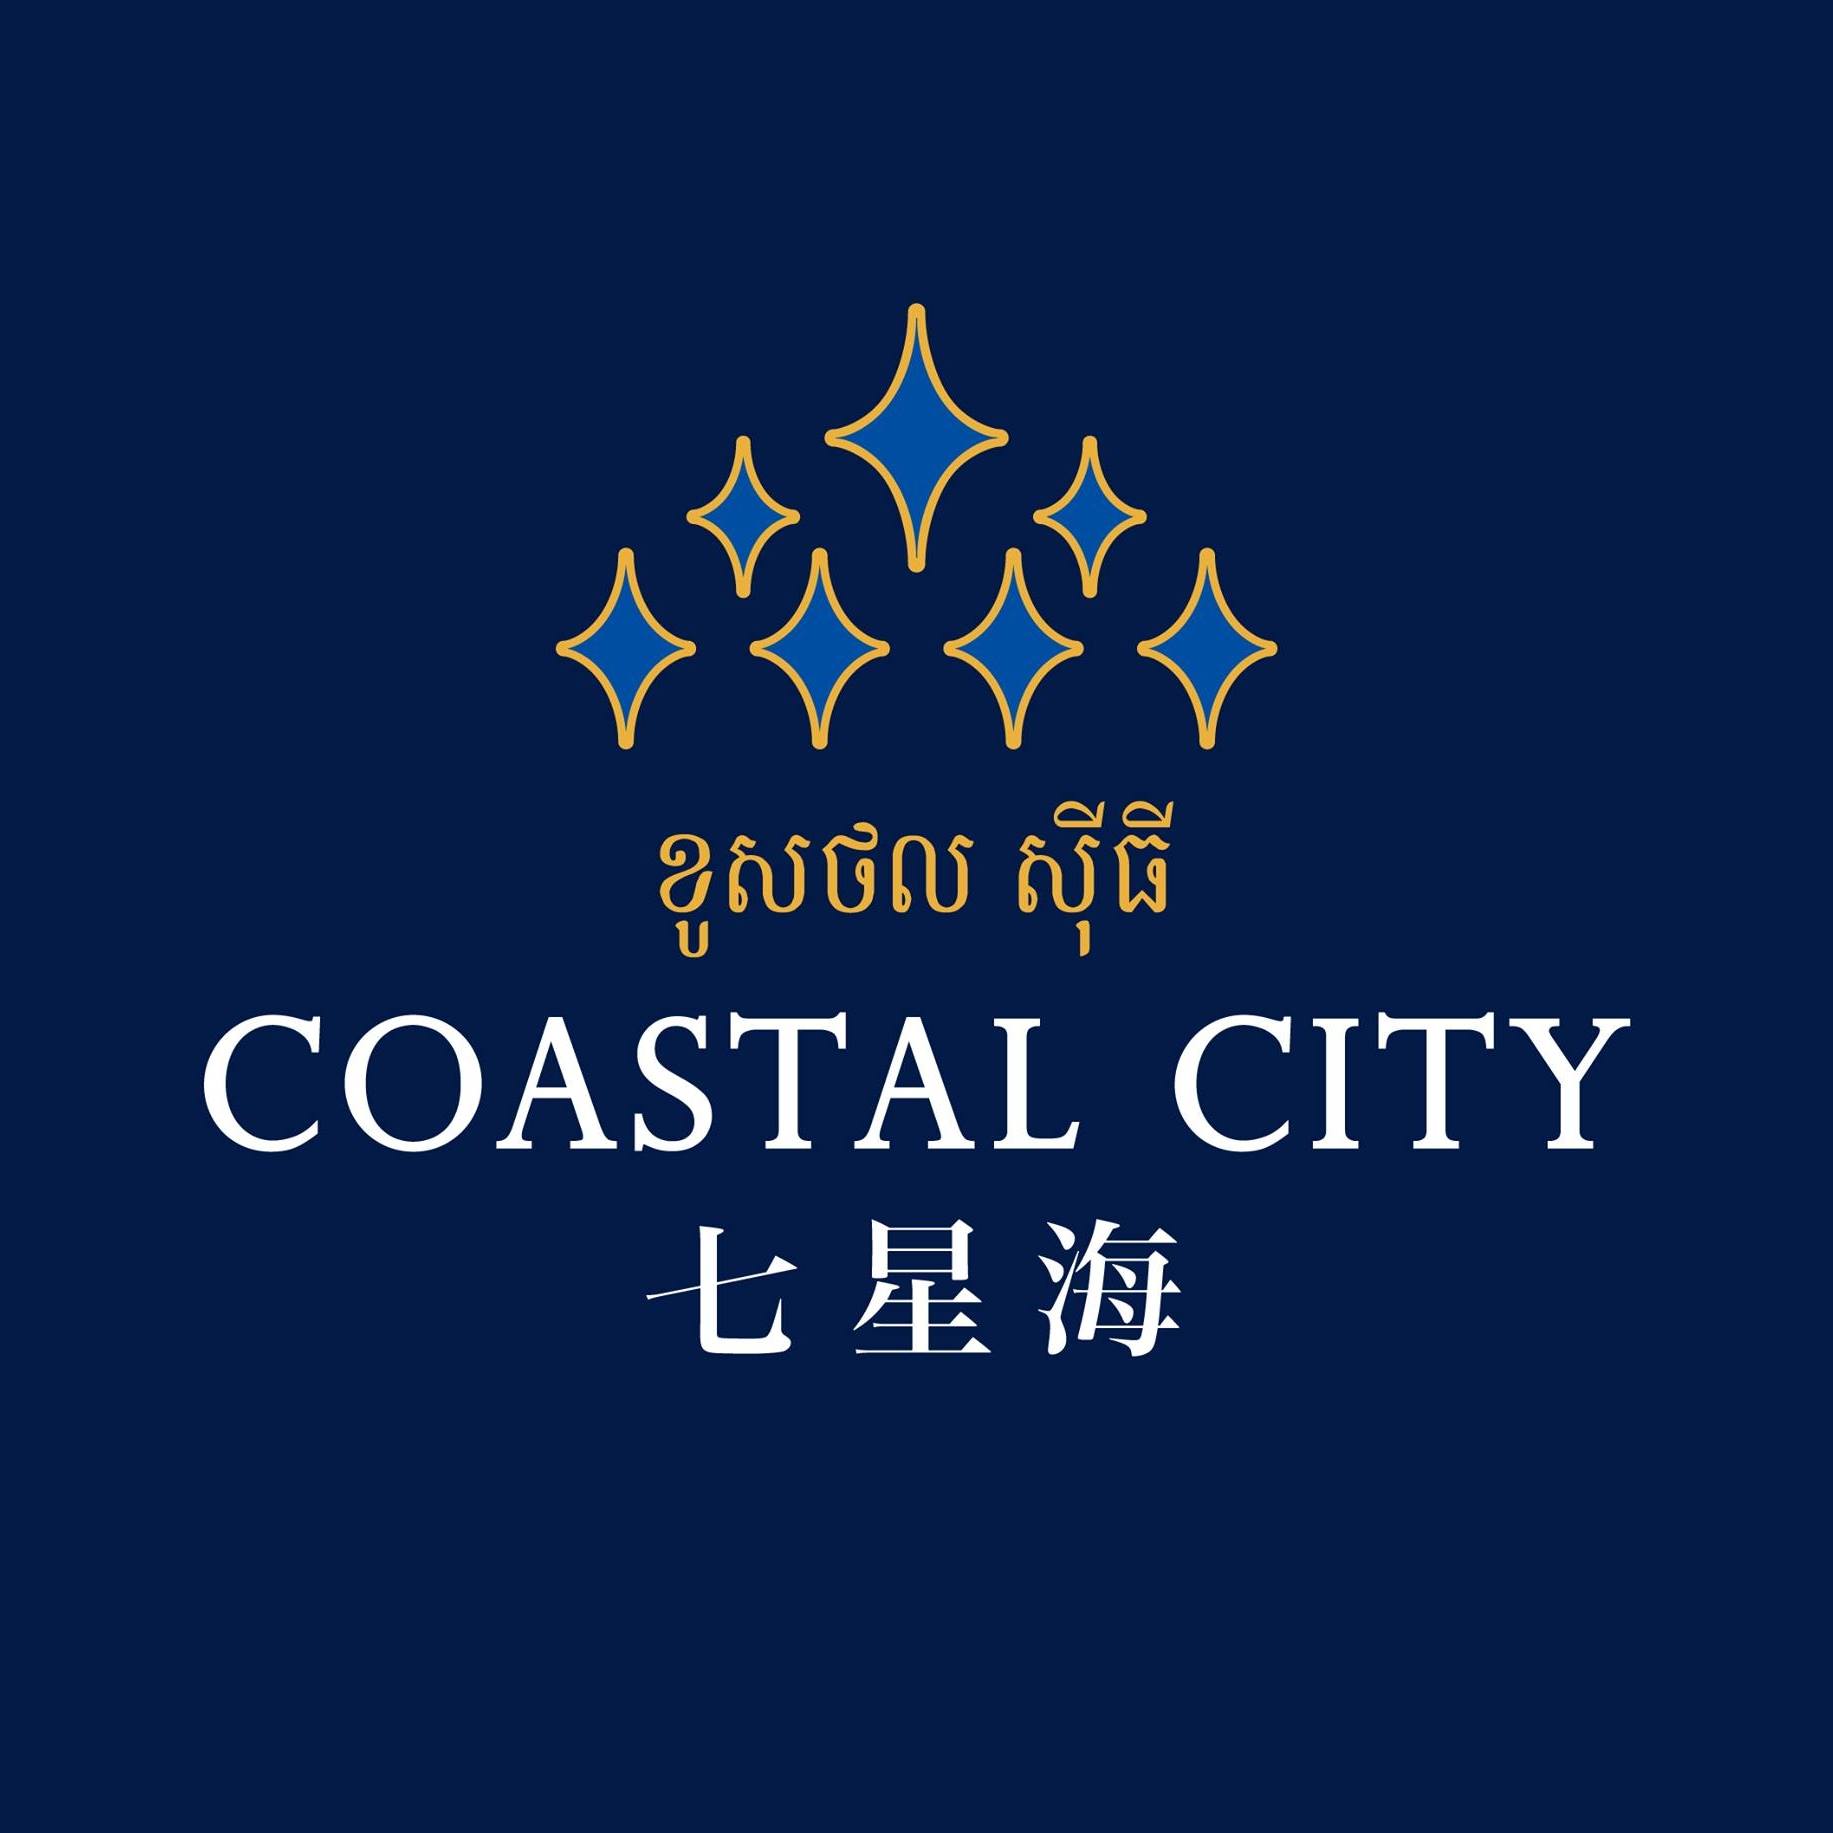 Coastal City Development Group Co., Ltd.